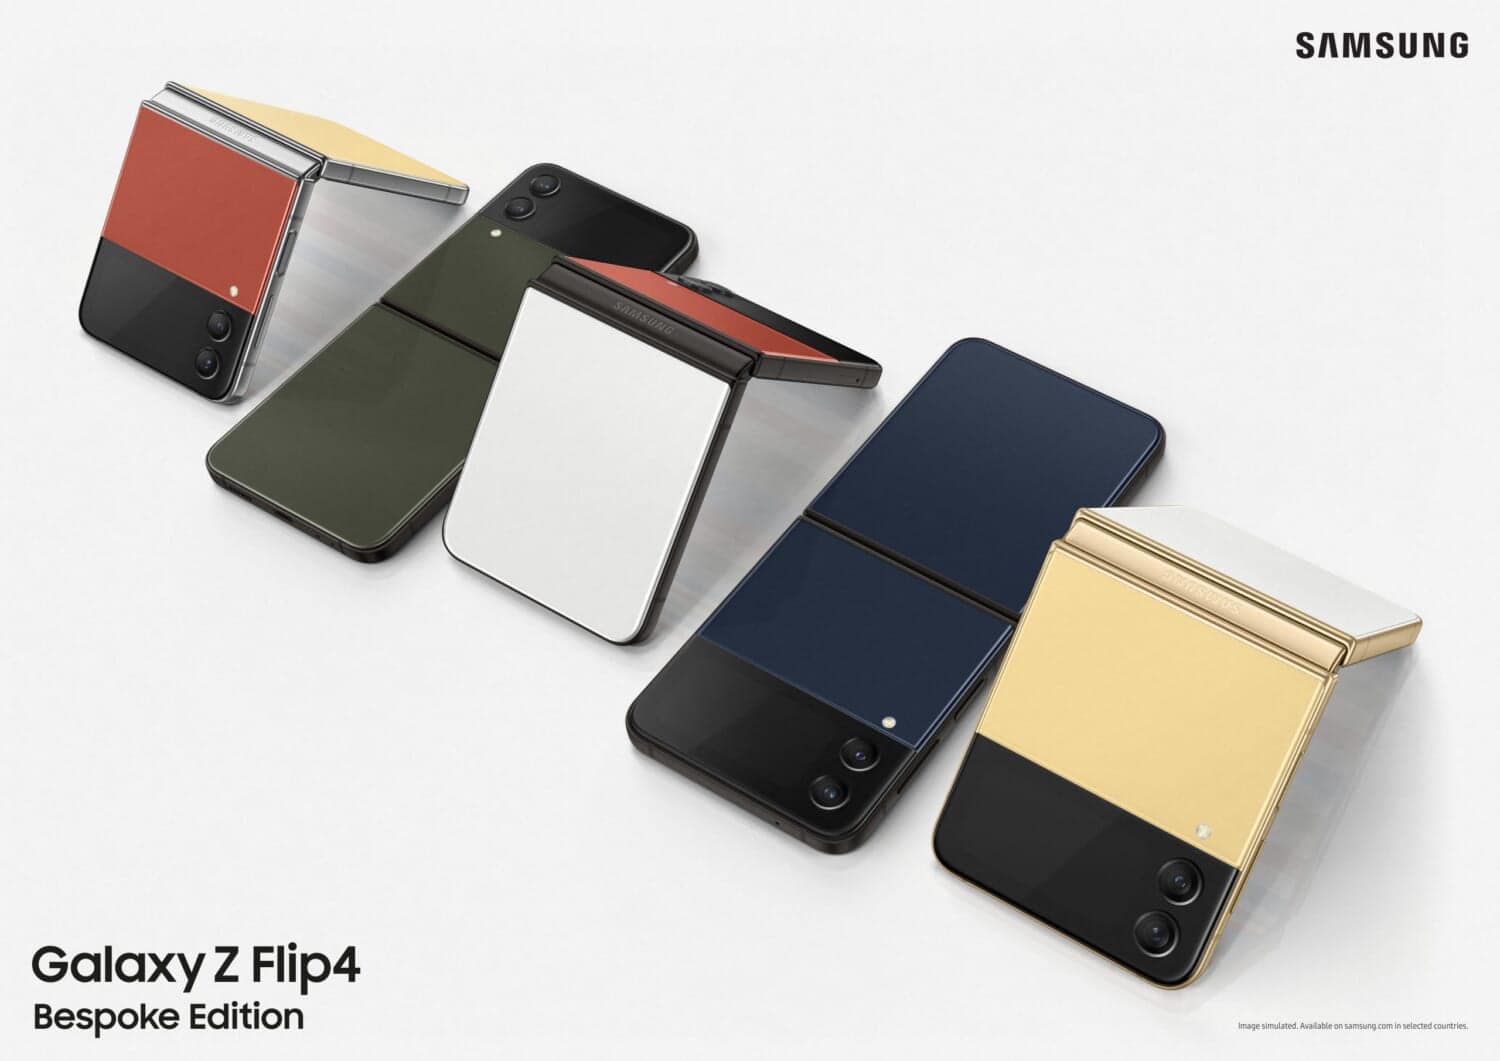 Samsungが新型折りたたみ式スマートフォン「Galaxy Z Flip 4」を海外で発表